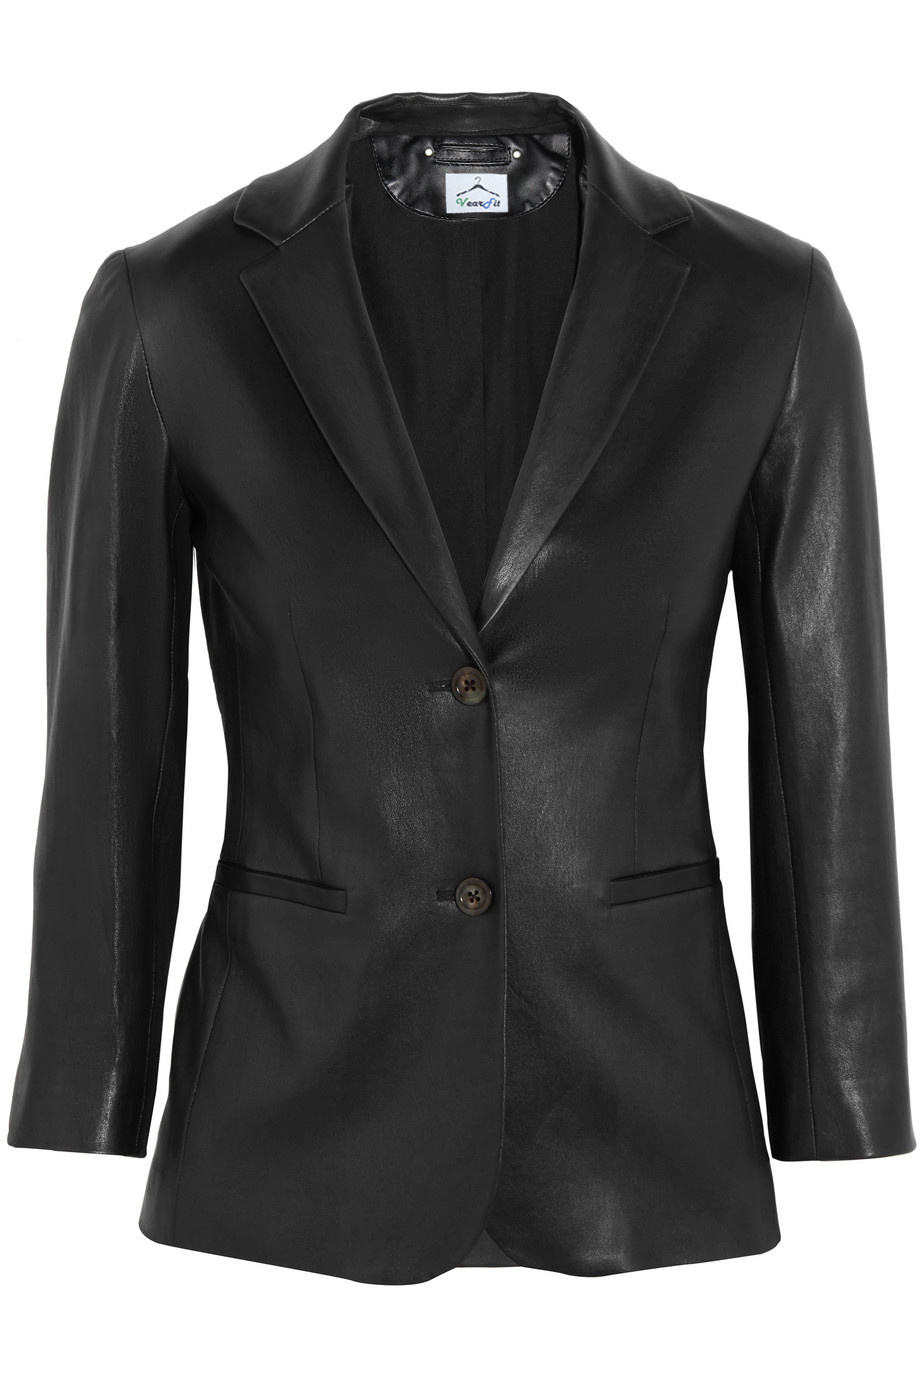 Women Black Leather Blazer Two buttons Office wear Casual